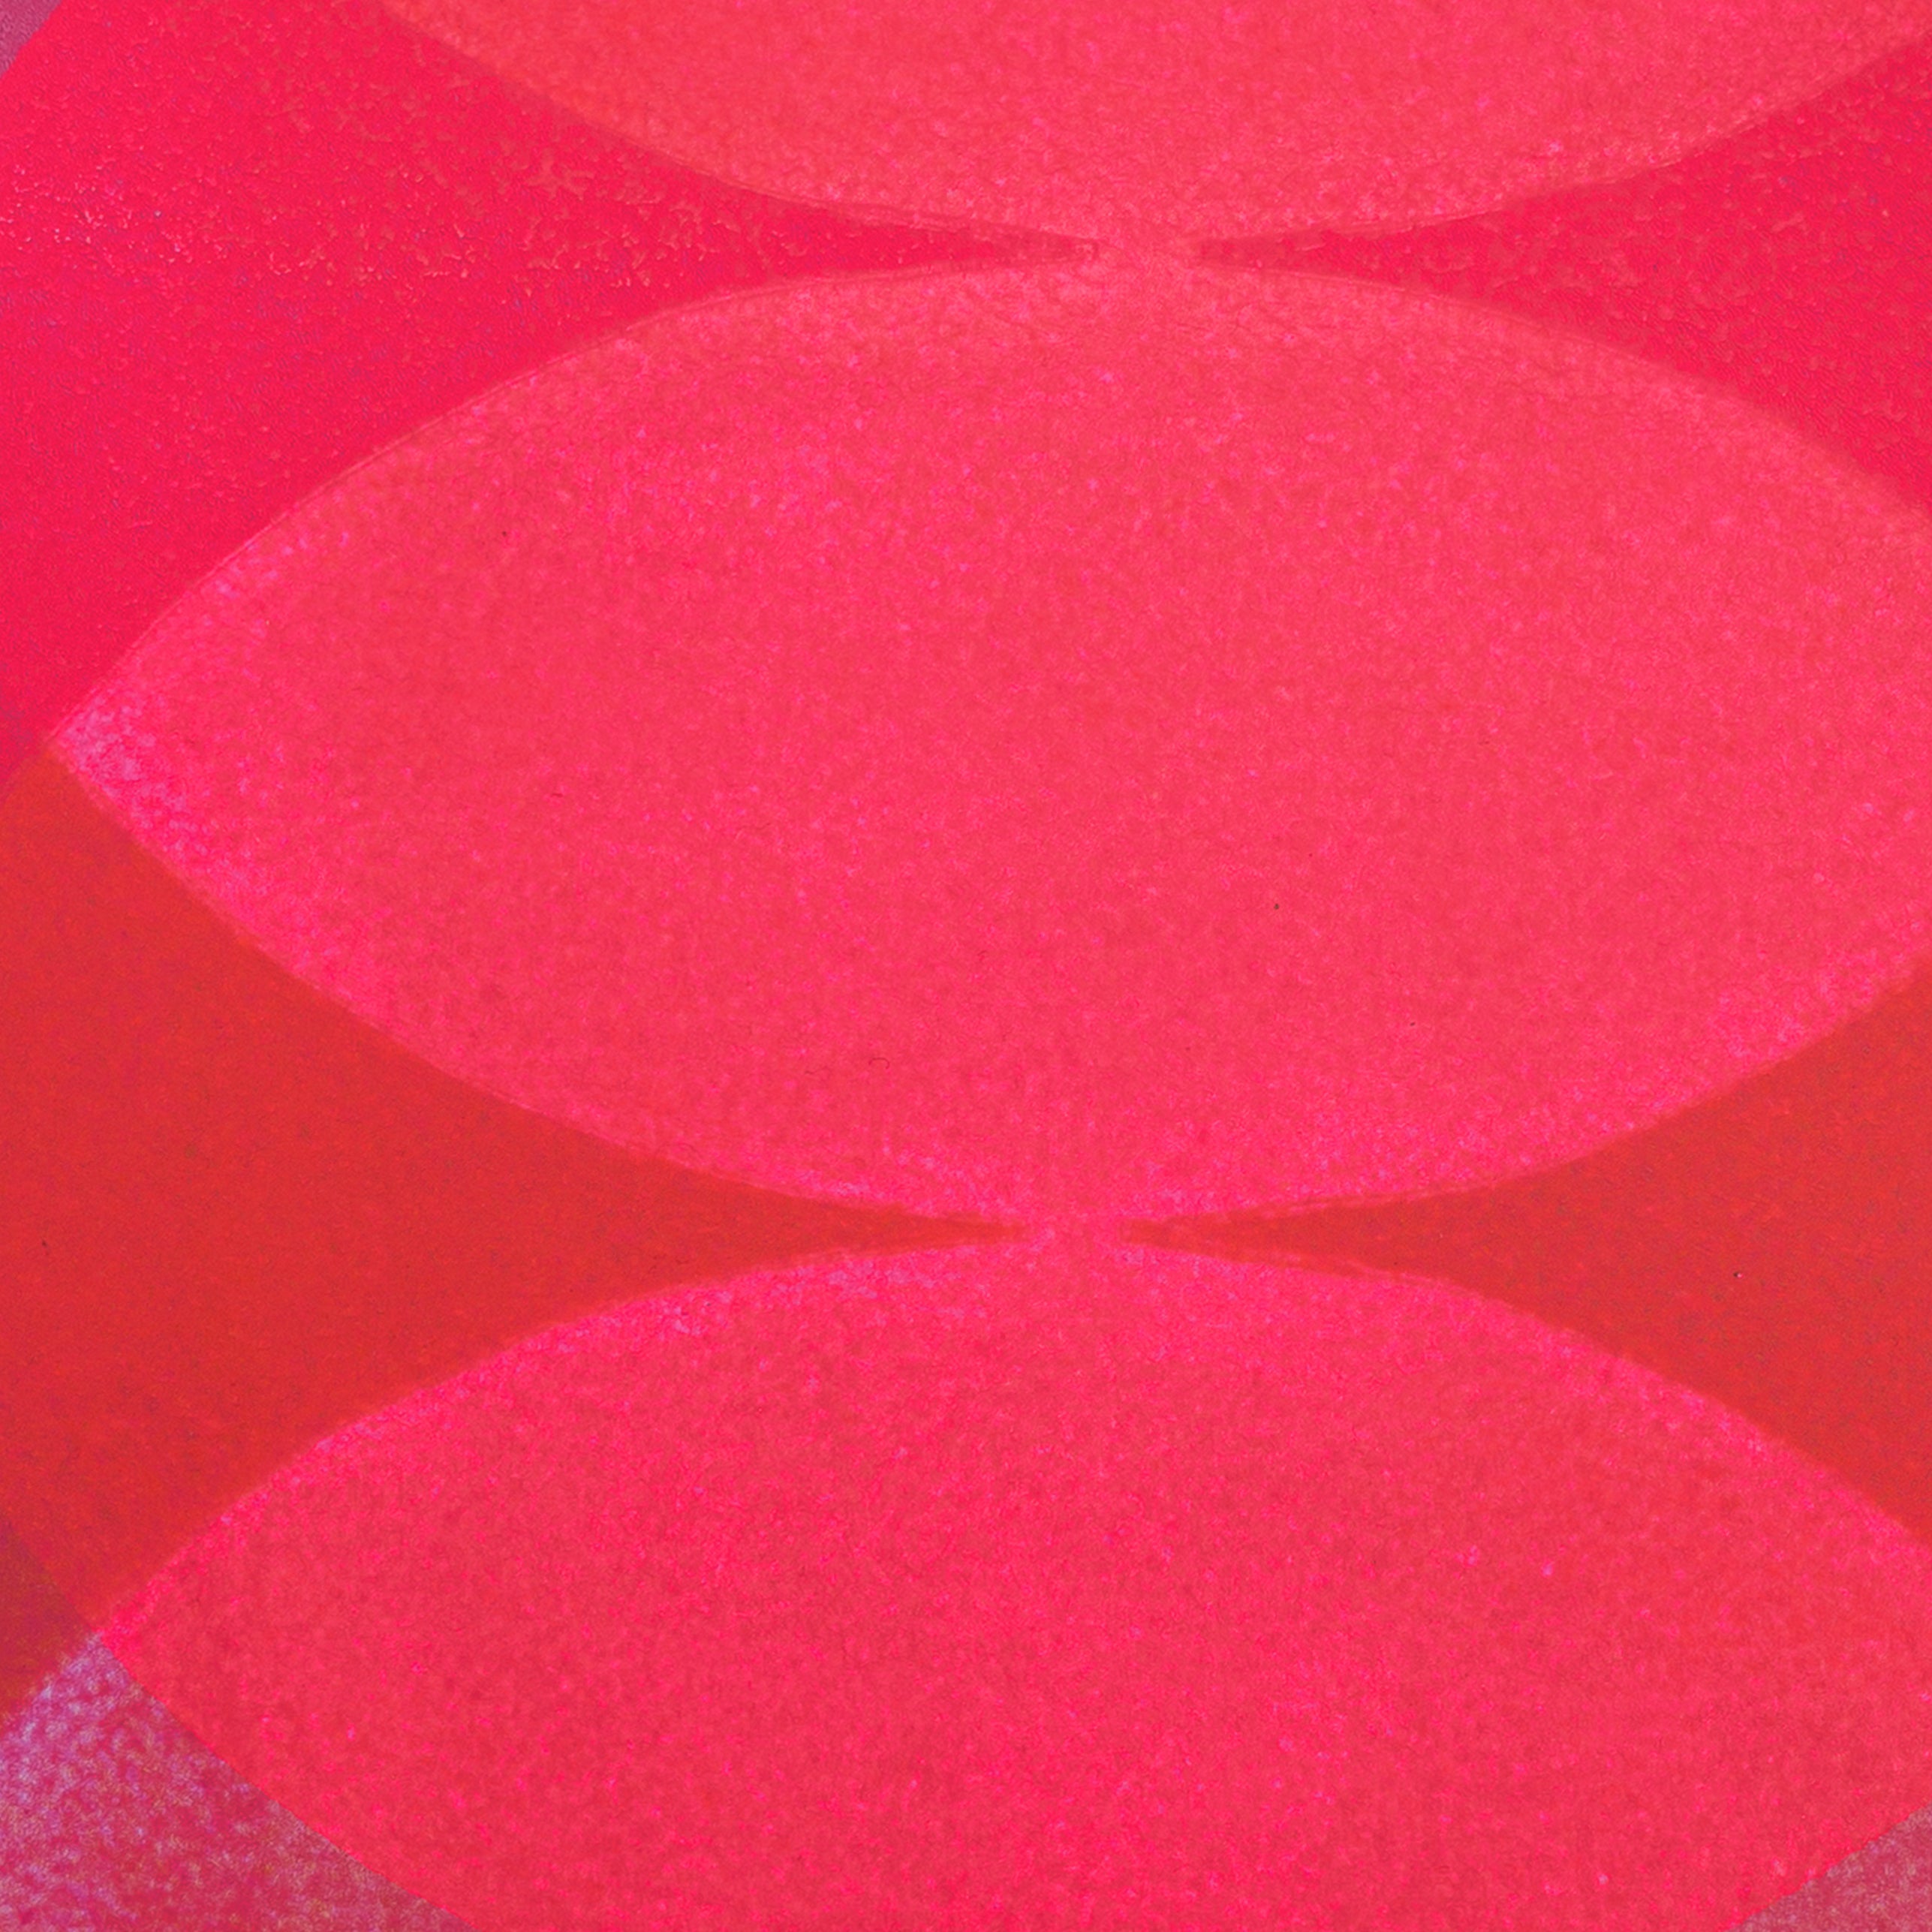 Fluor pink Round wall decoration I Handmade poster Enkel Art Studio